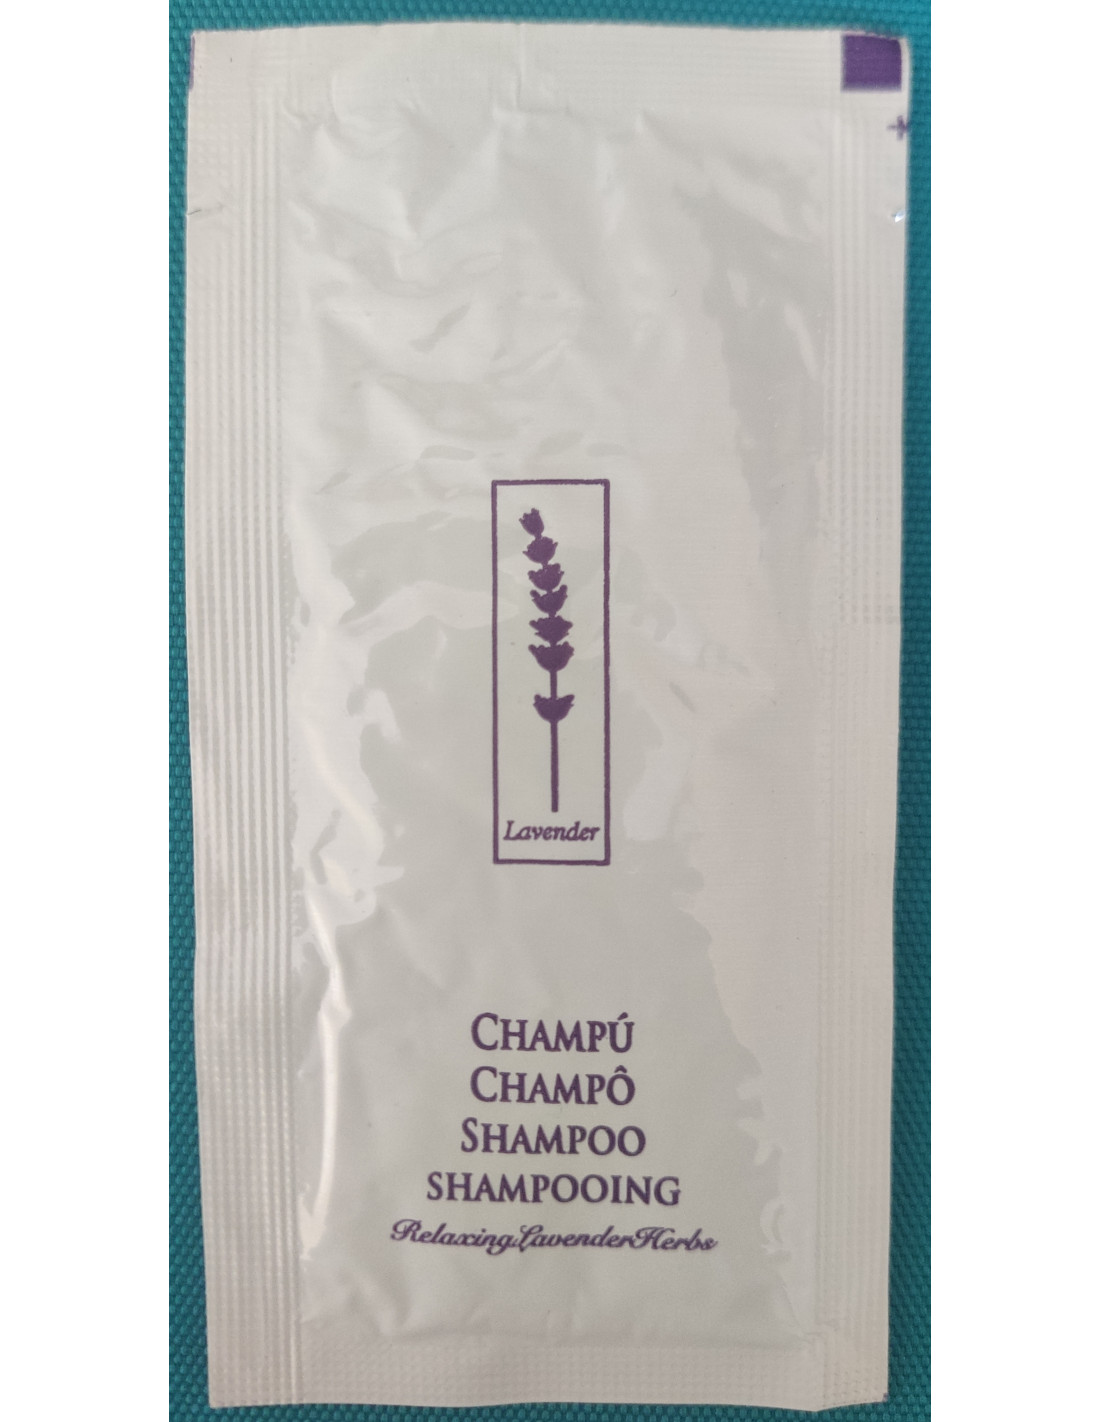 Shampoo monodose bustine da 10 ml - box 500 unità.